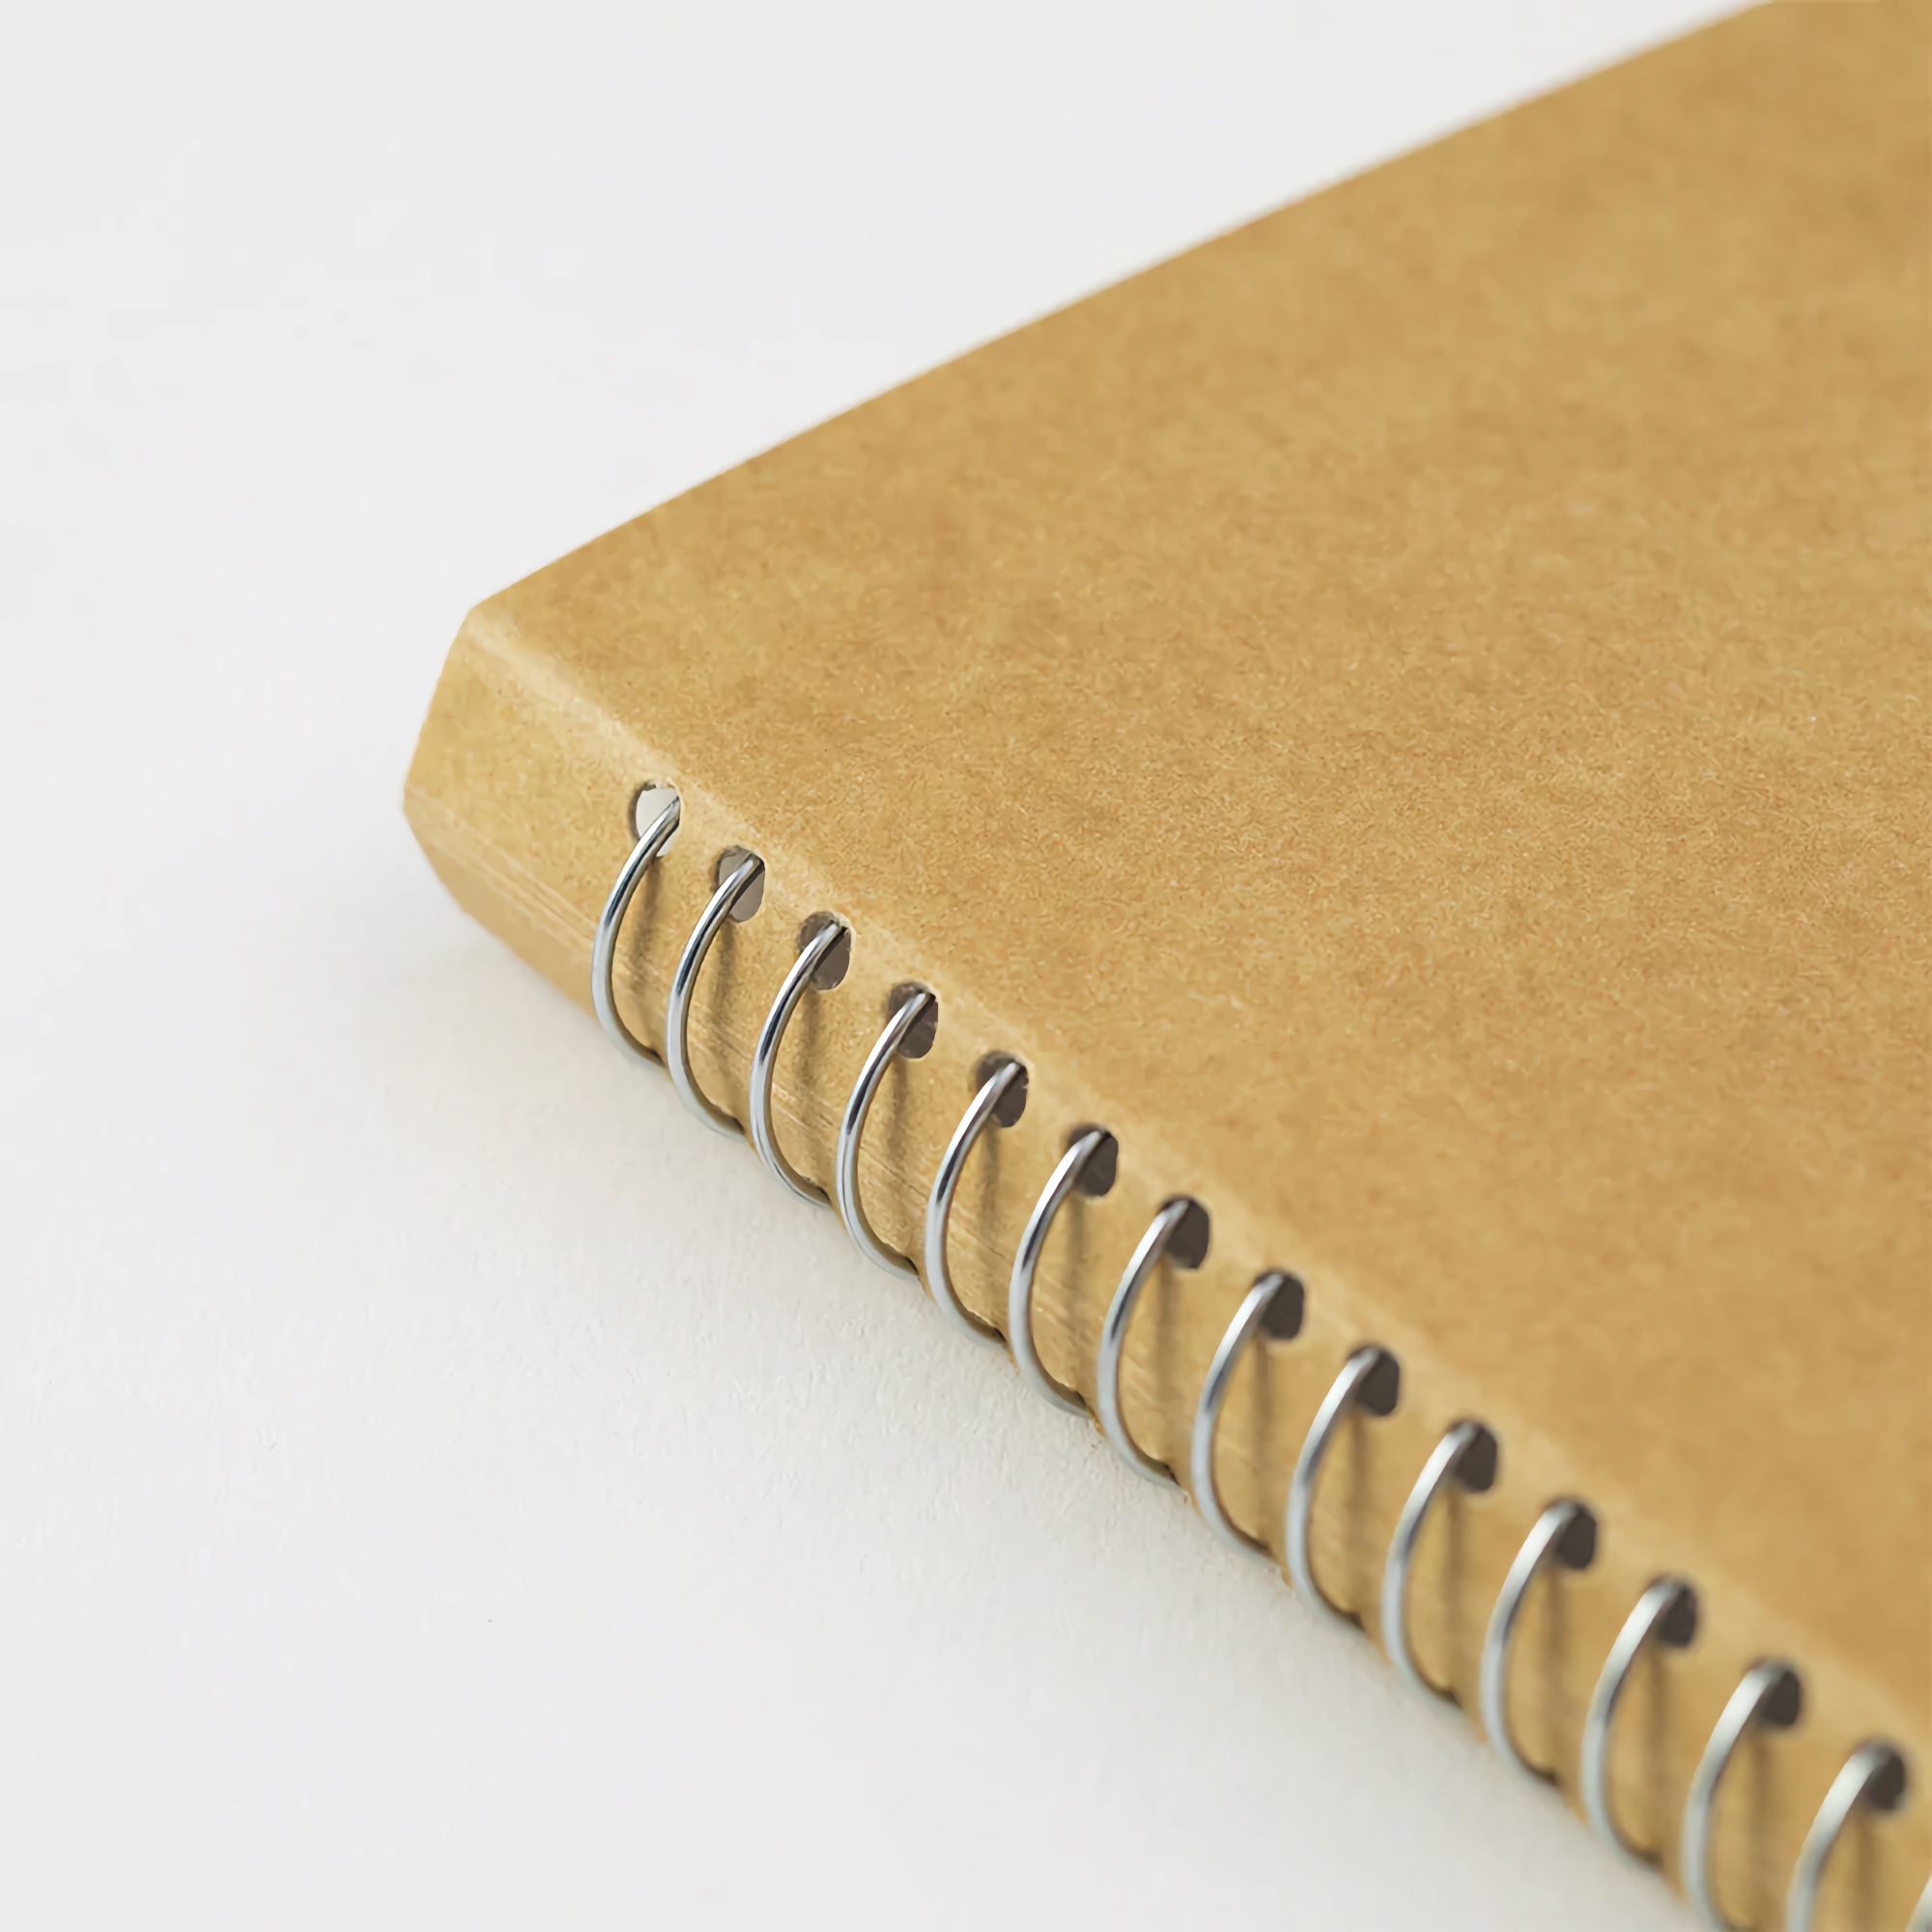 Traveler's Company Spiral Ring Notebook A6 Slim Blank